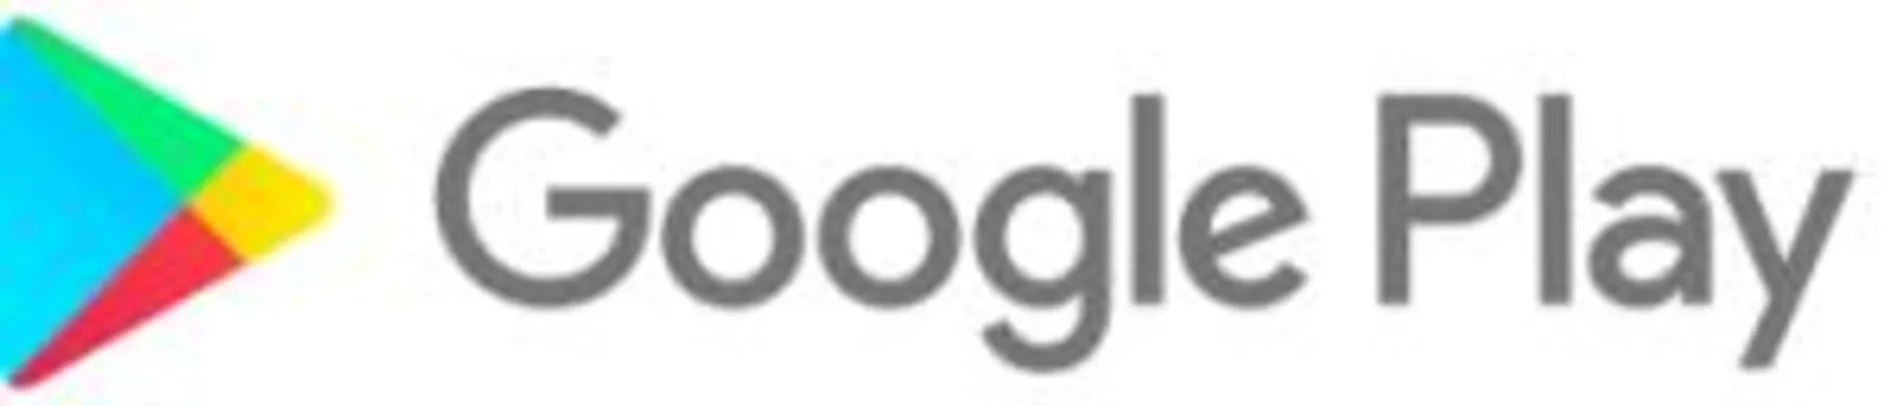 [GRATIS] Jogos Android da google play